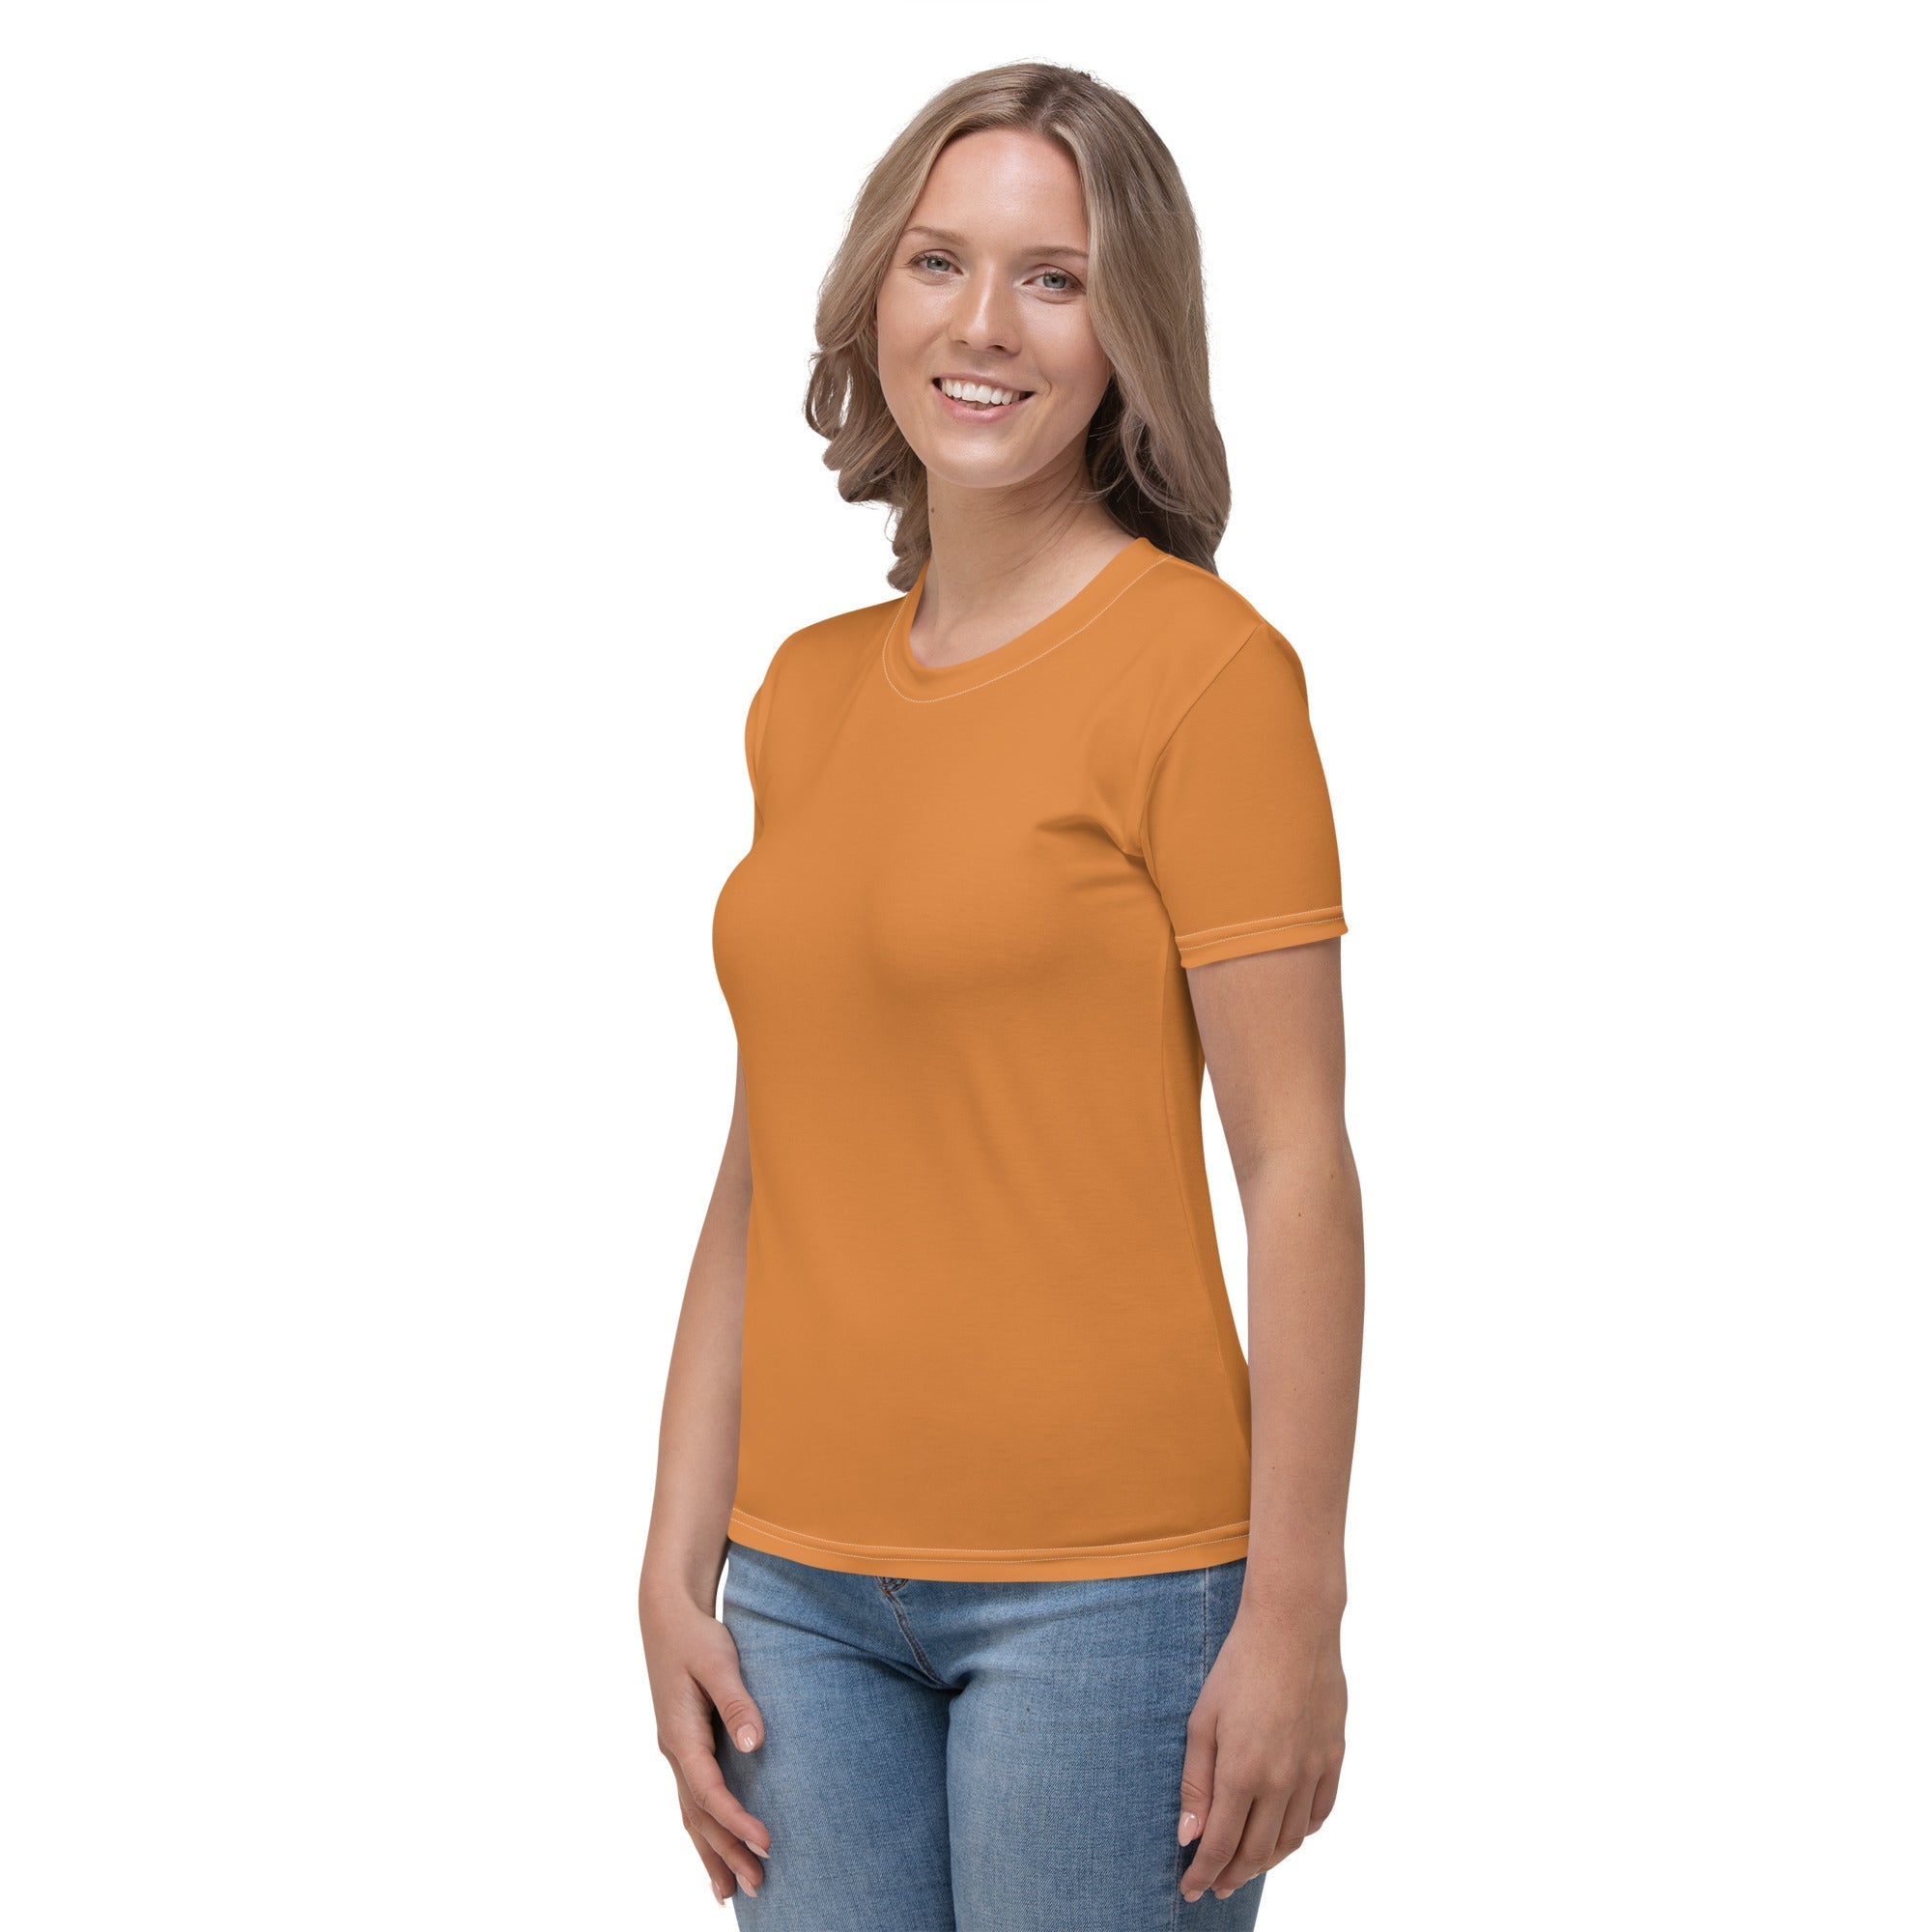 Tangerine Orange T-shirt